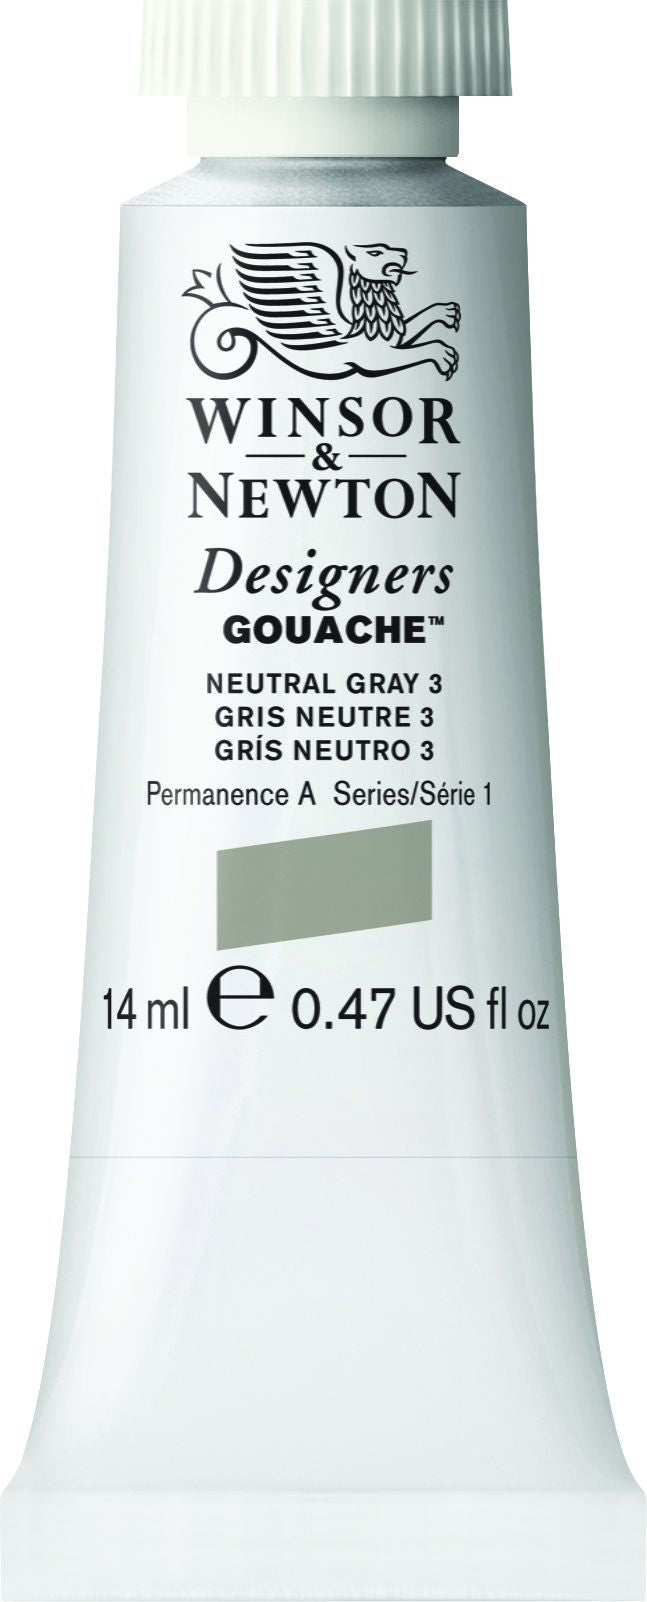 Winsor & Newton Designers' Gouache Paint 14ml